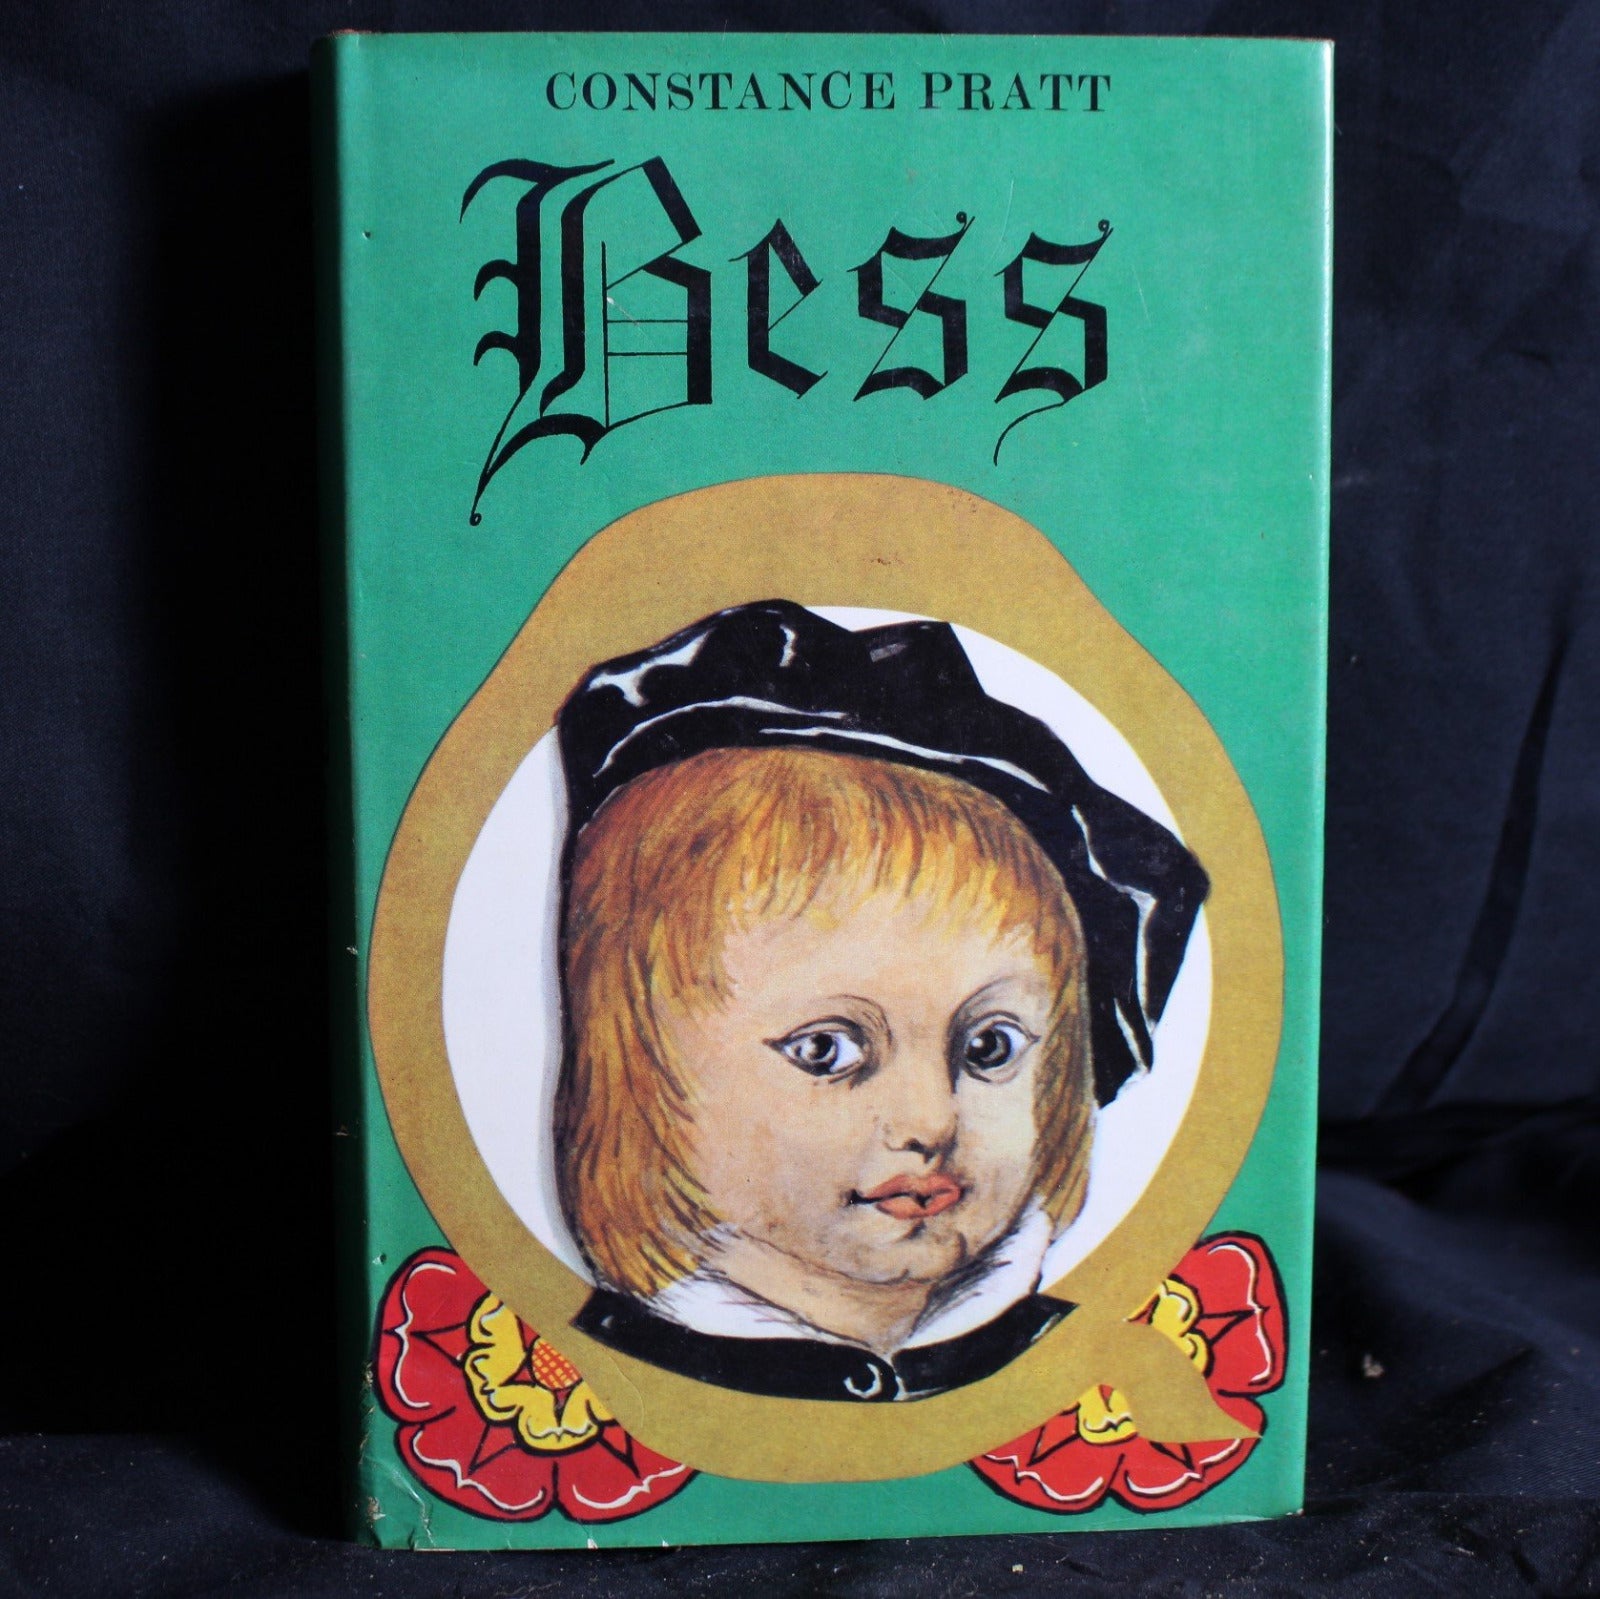 Hardcover Bess by Constance Pratt, 1979